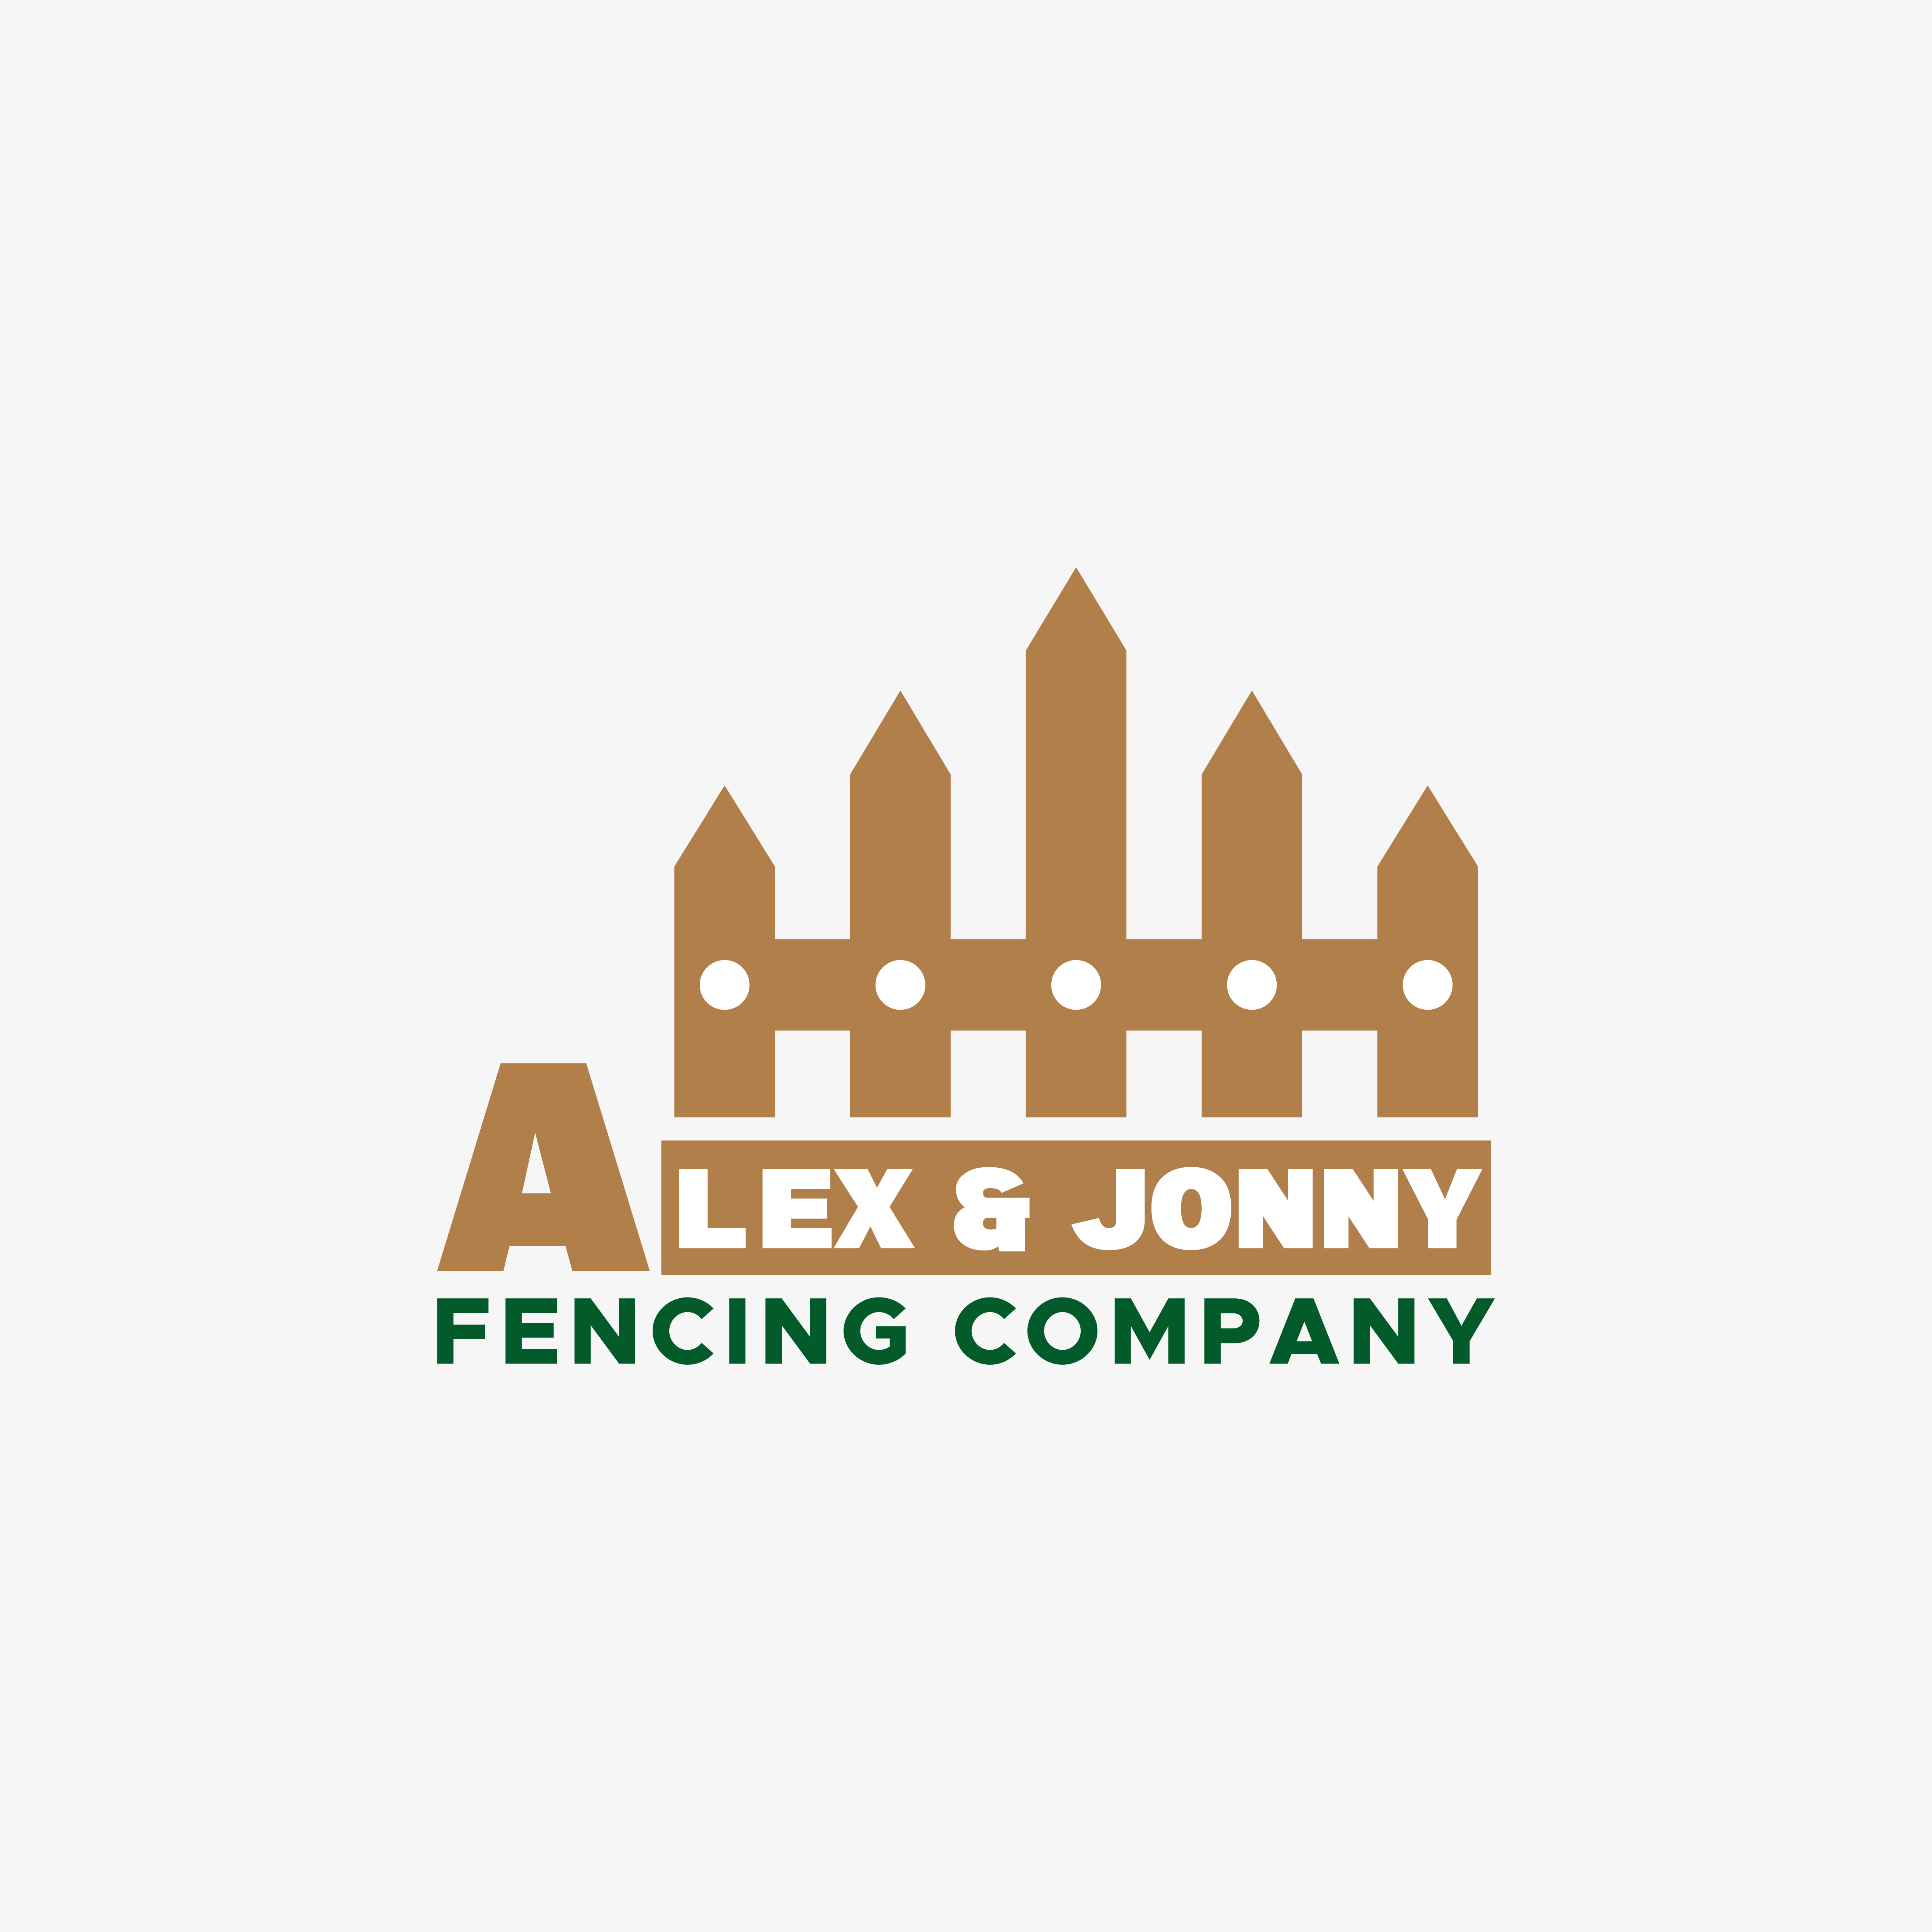 Alex & Jonny Fencing Company